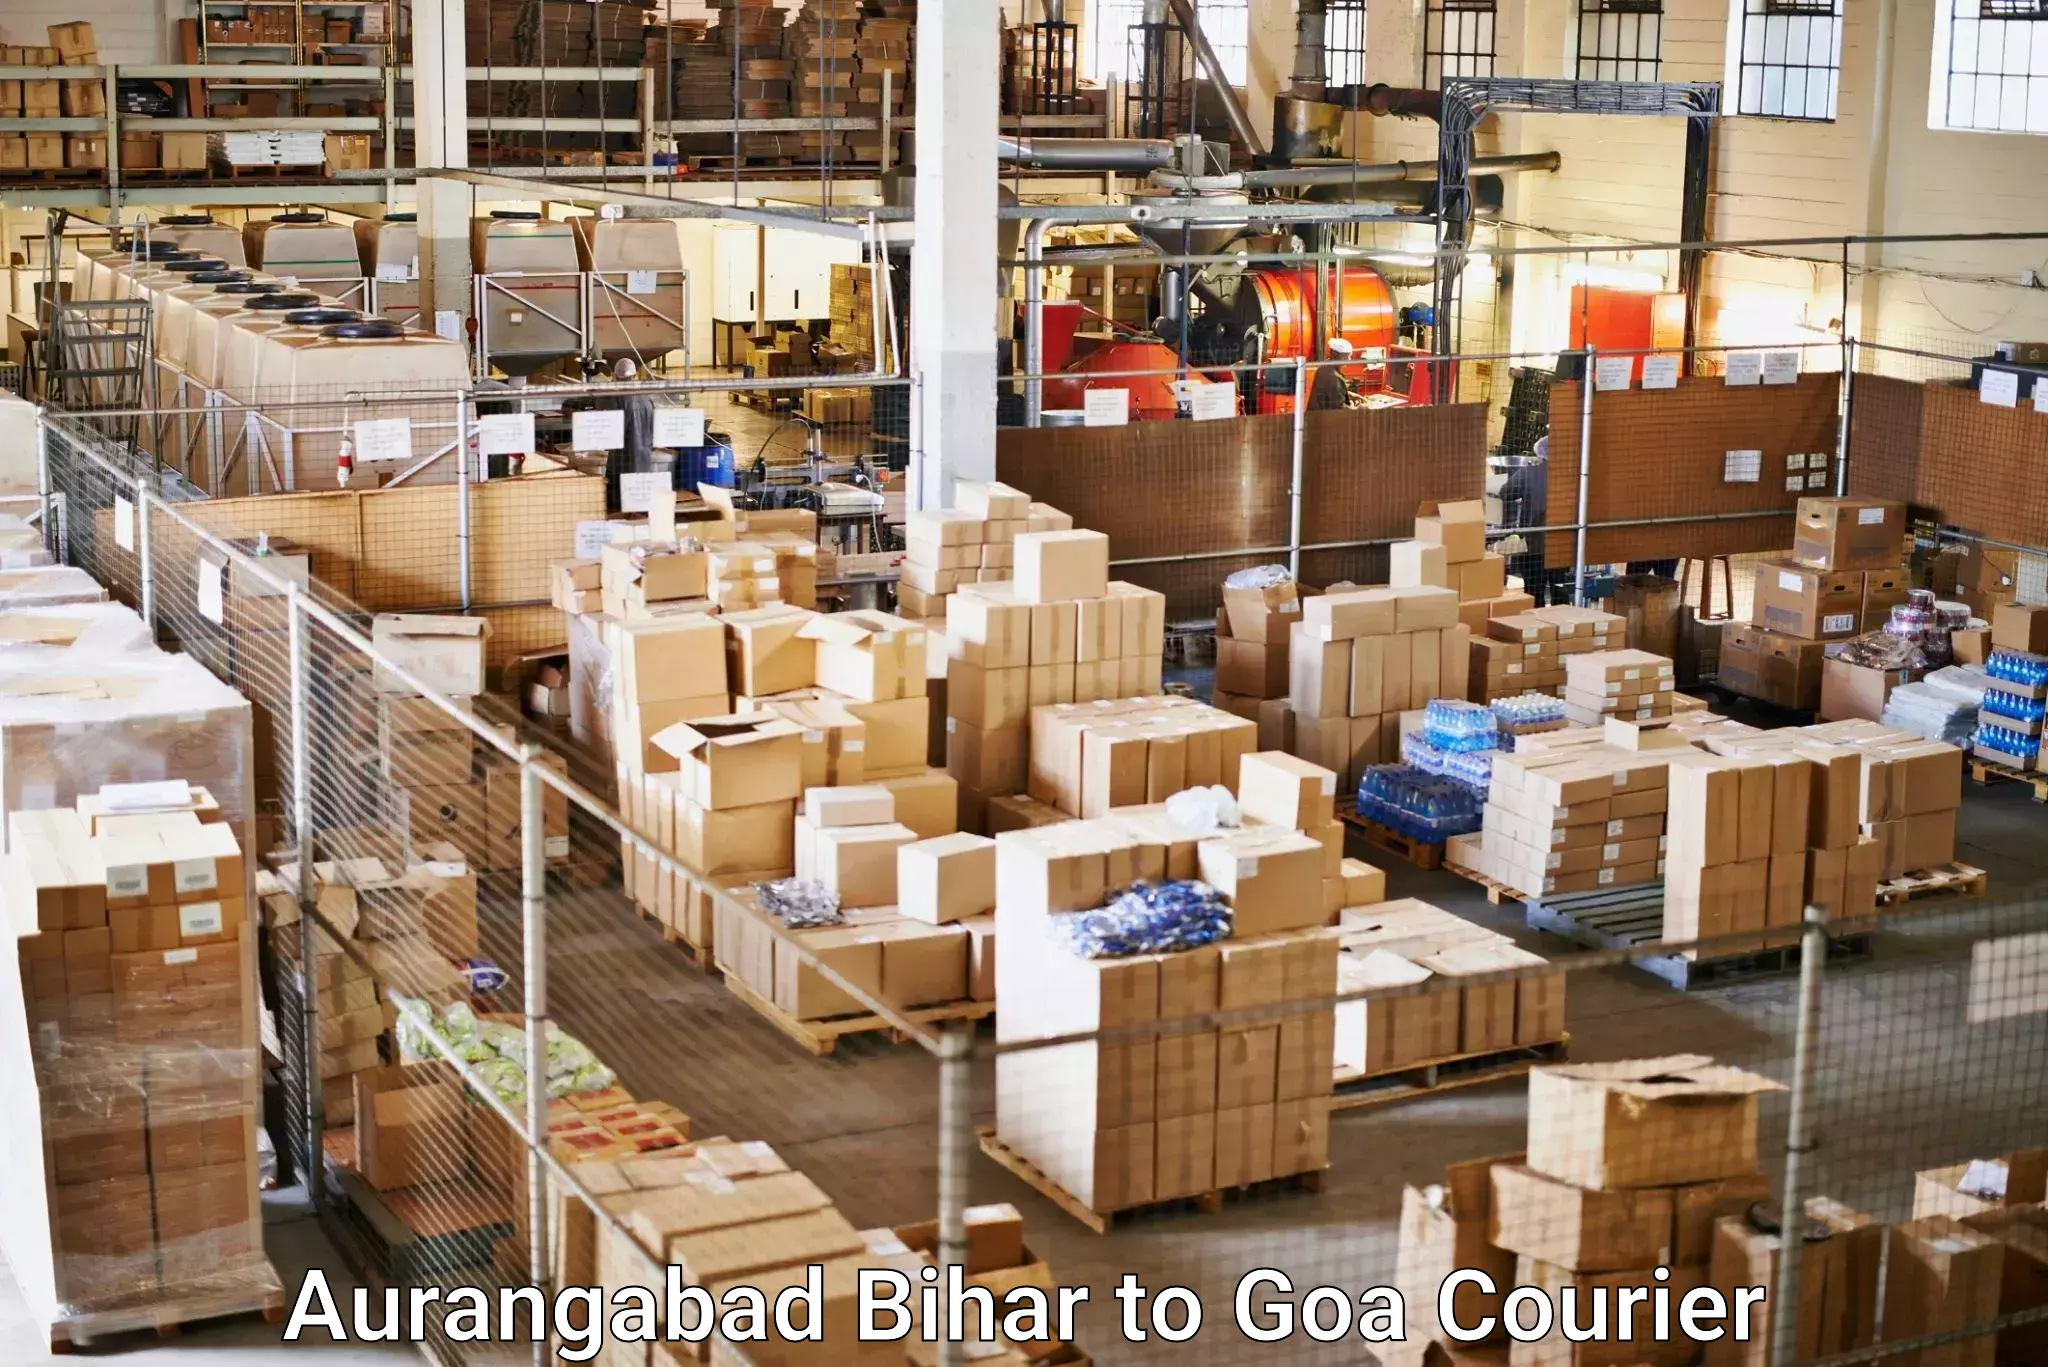 Courier service efficiency in Aurangabad Bihar to South Goa